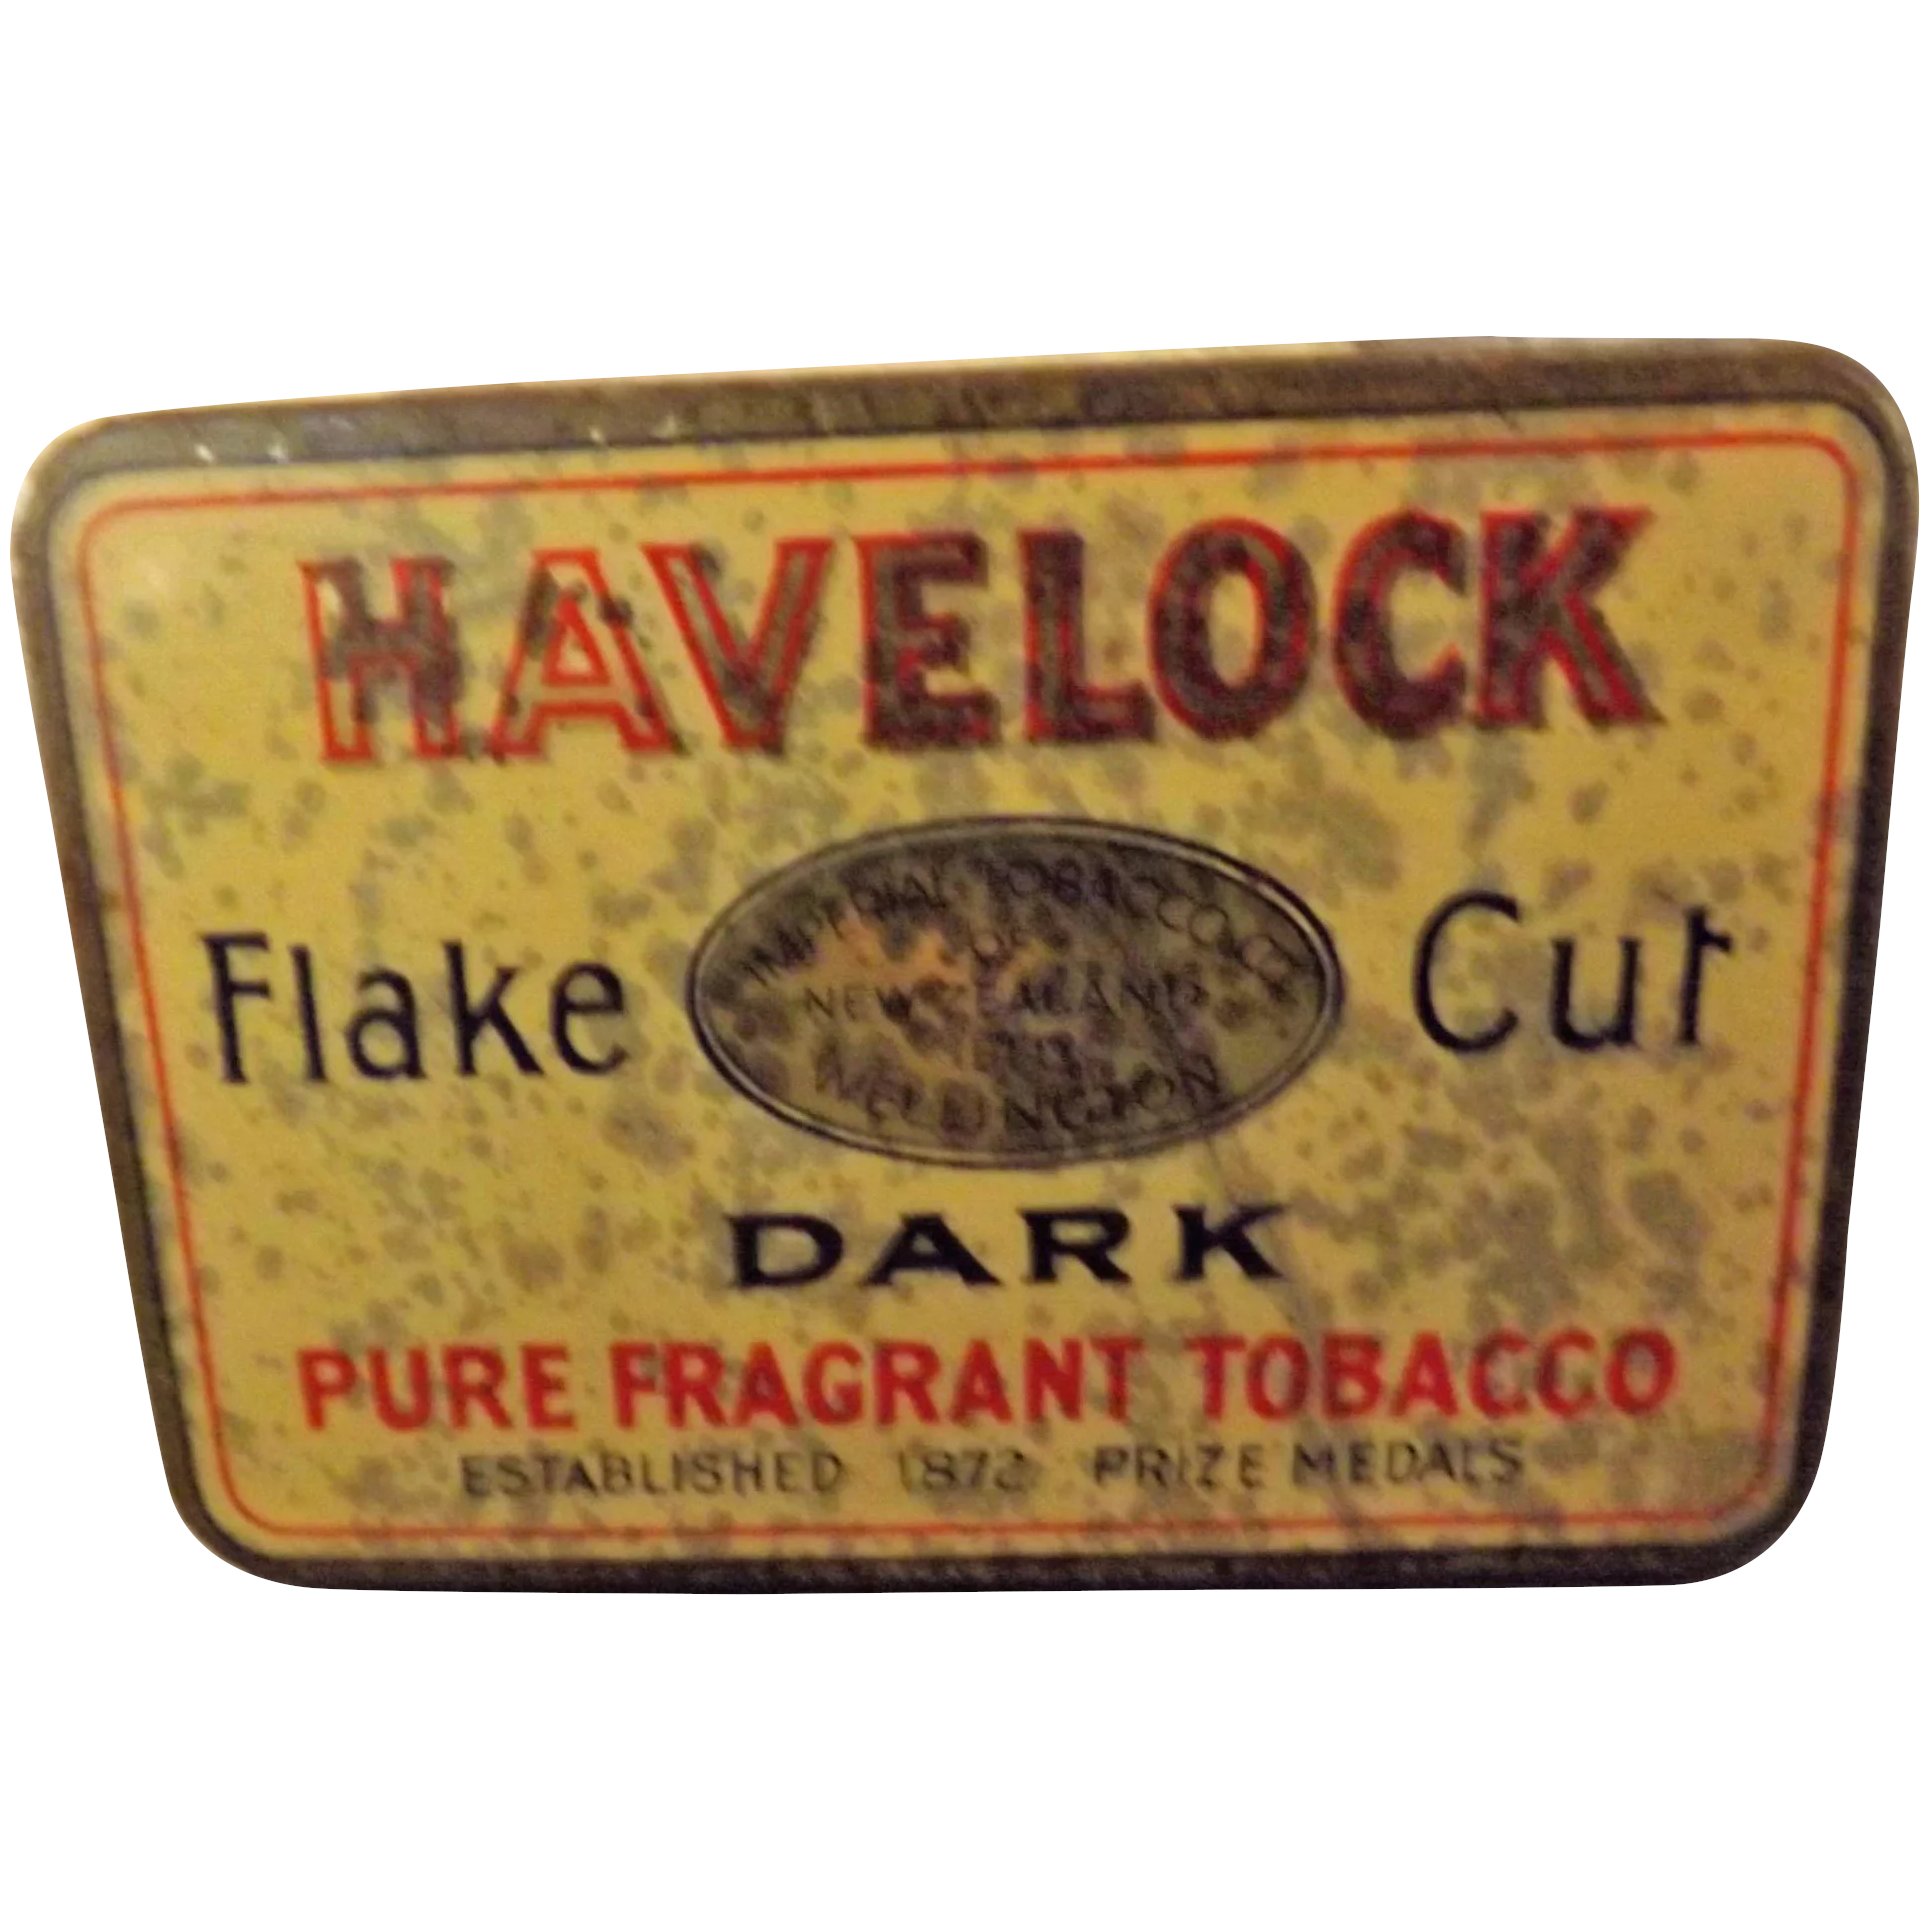 Havelock Flake Cut Dark Tobacco Tin